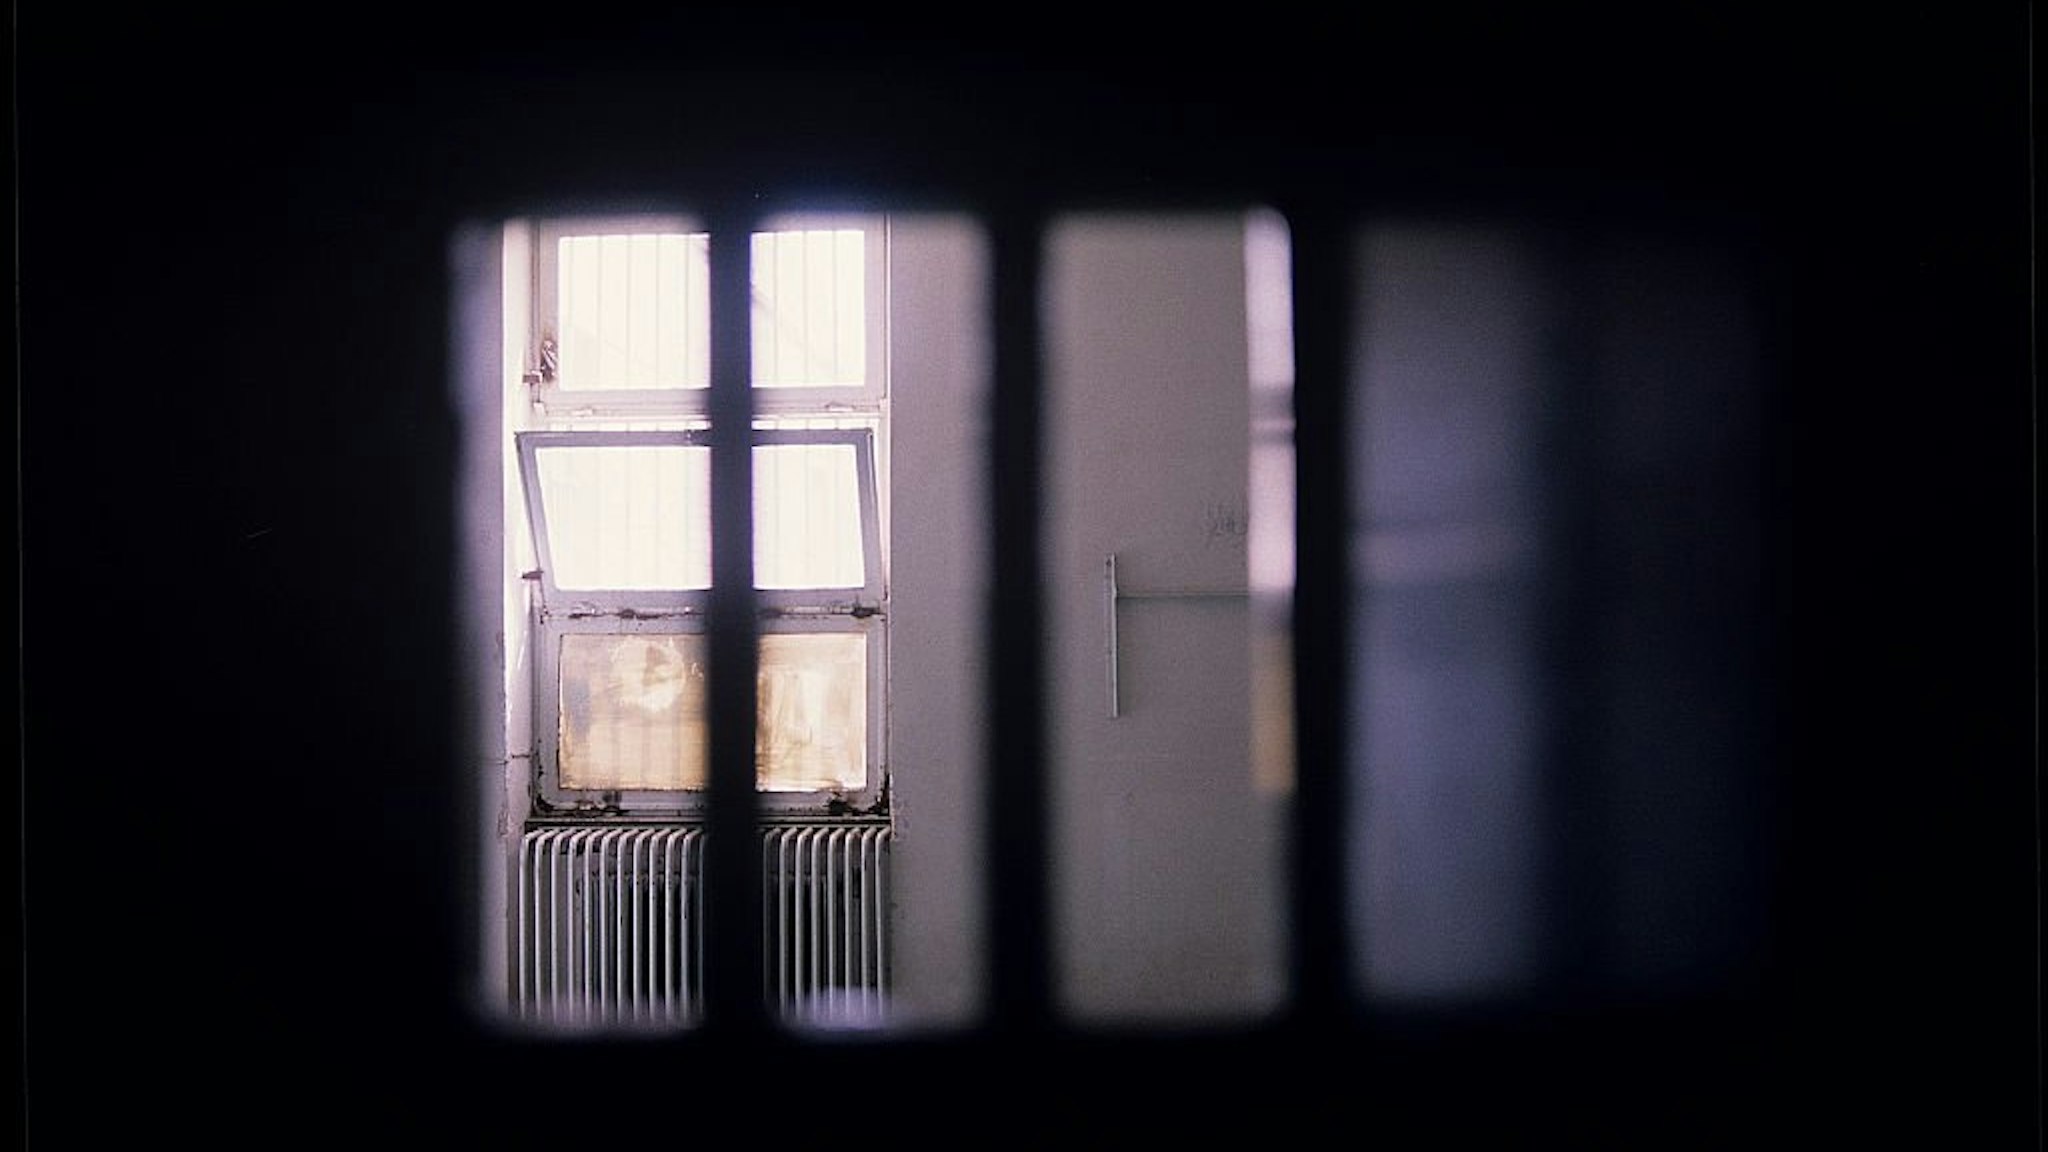 Evin Prison Cell